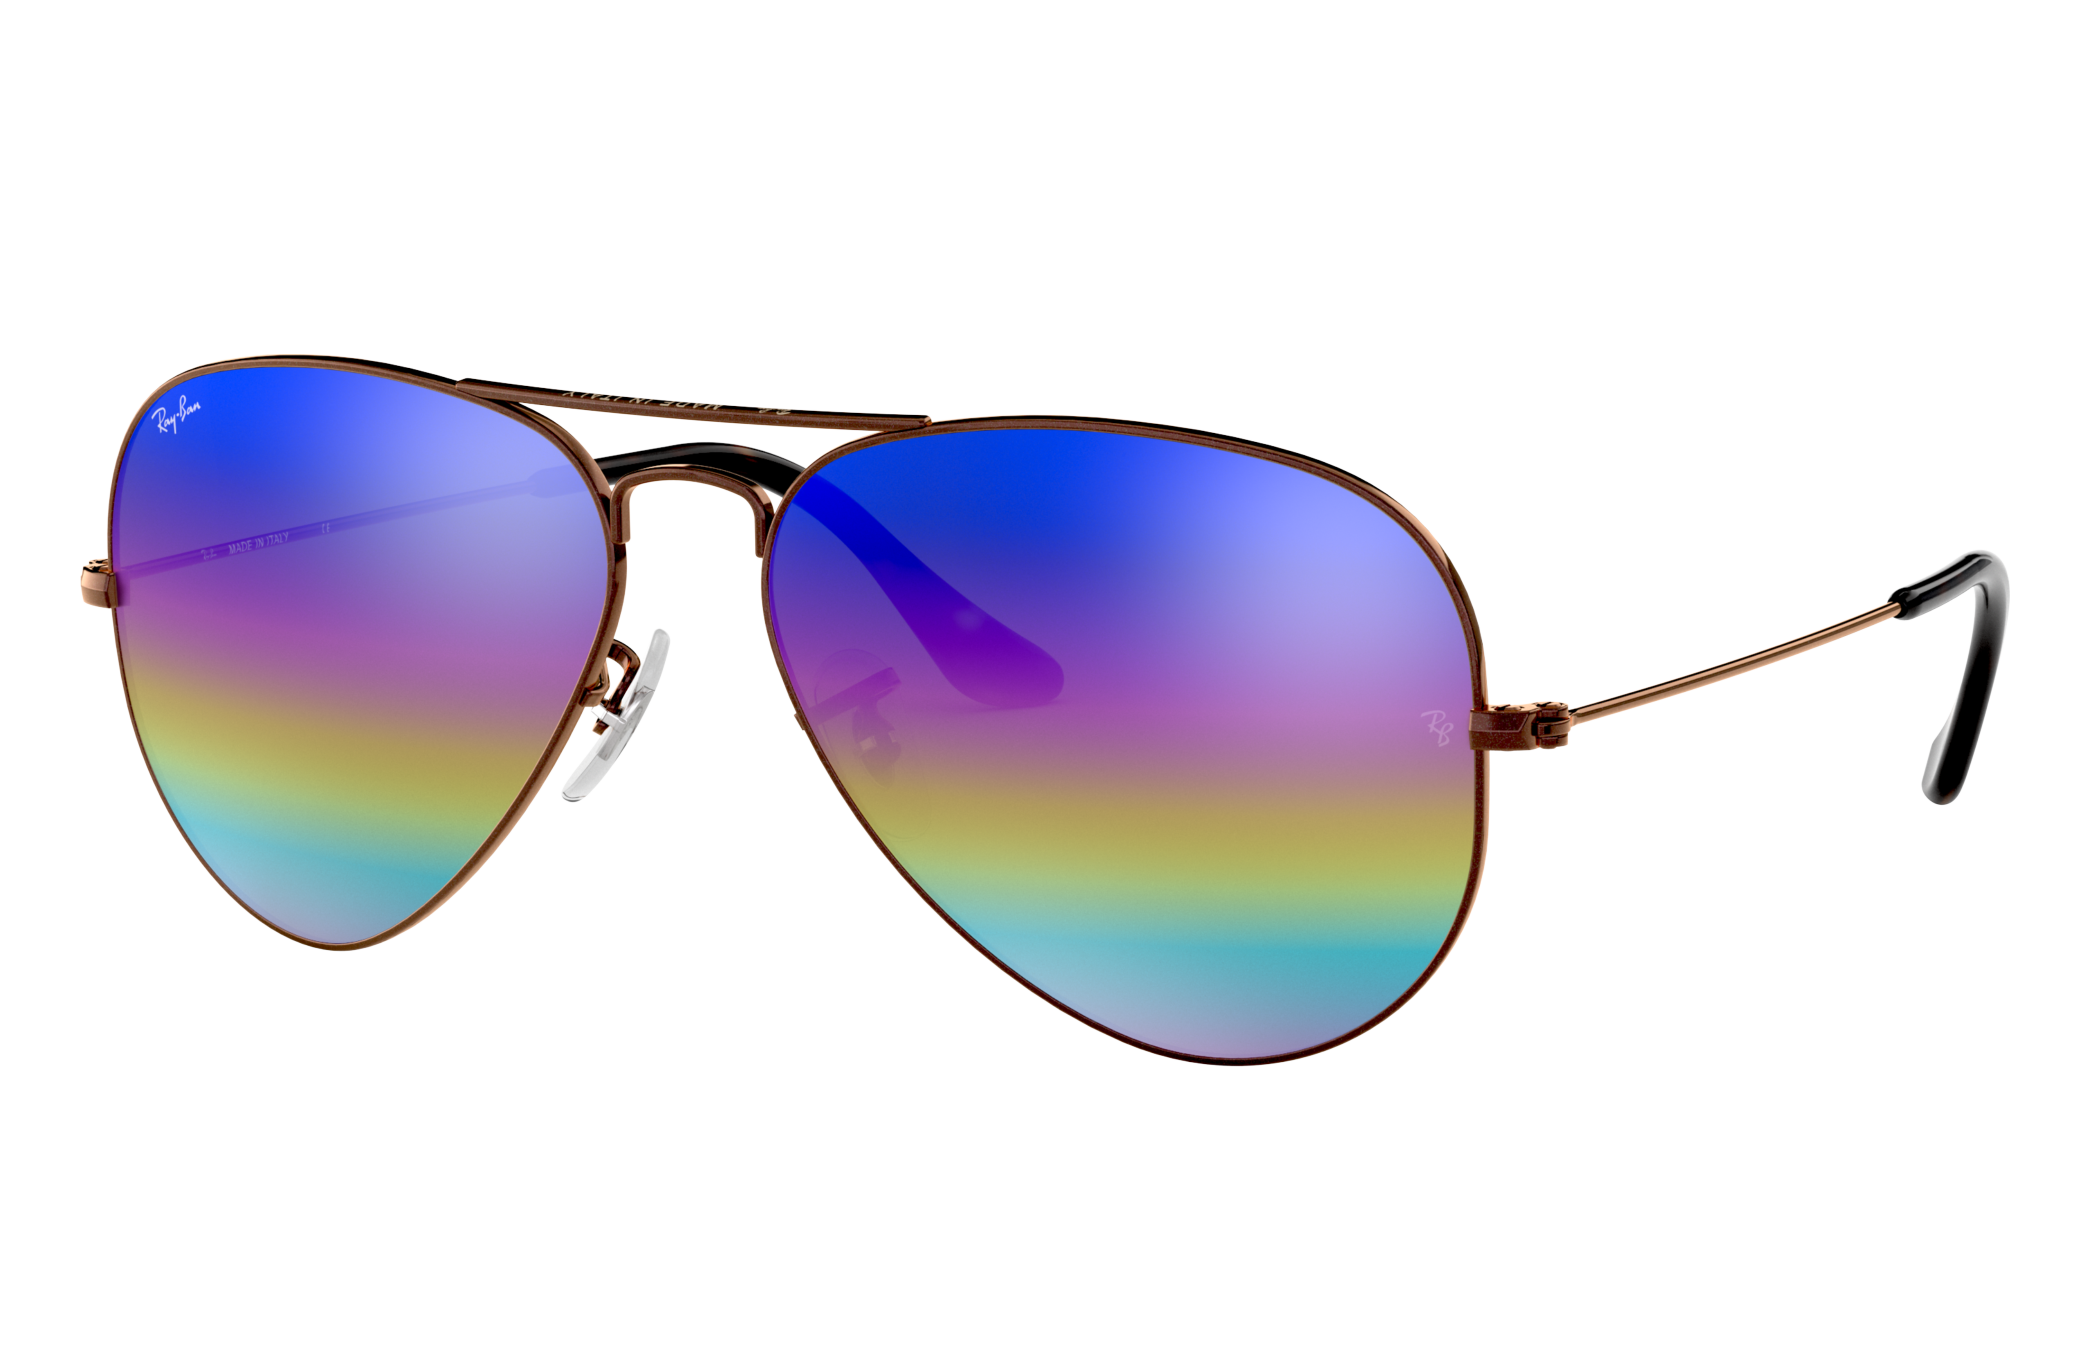 Aviator Mineral Flash Lenses Sunglasses in Bronze-Copper and Blue 